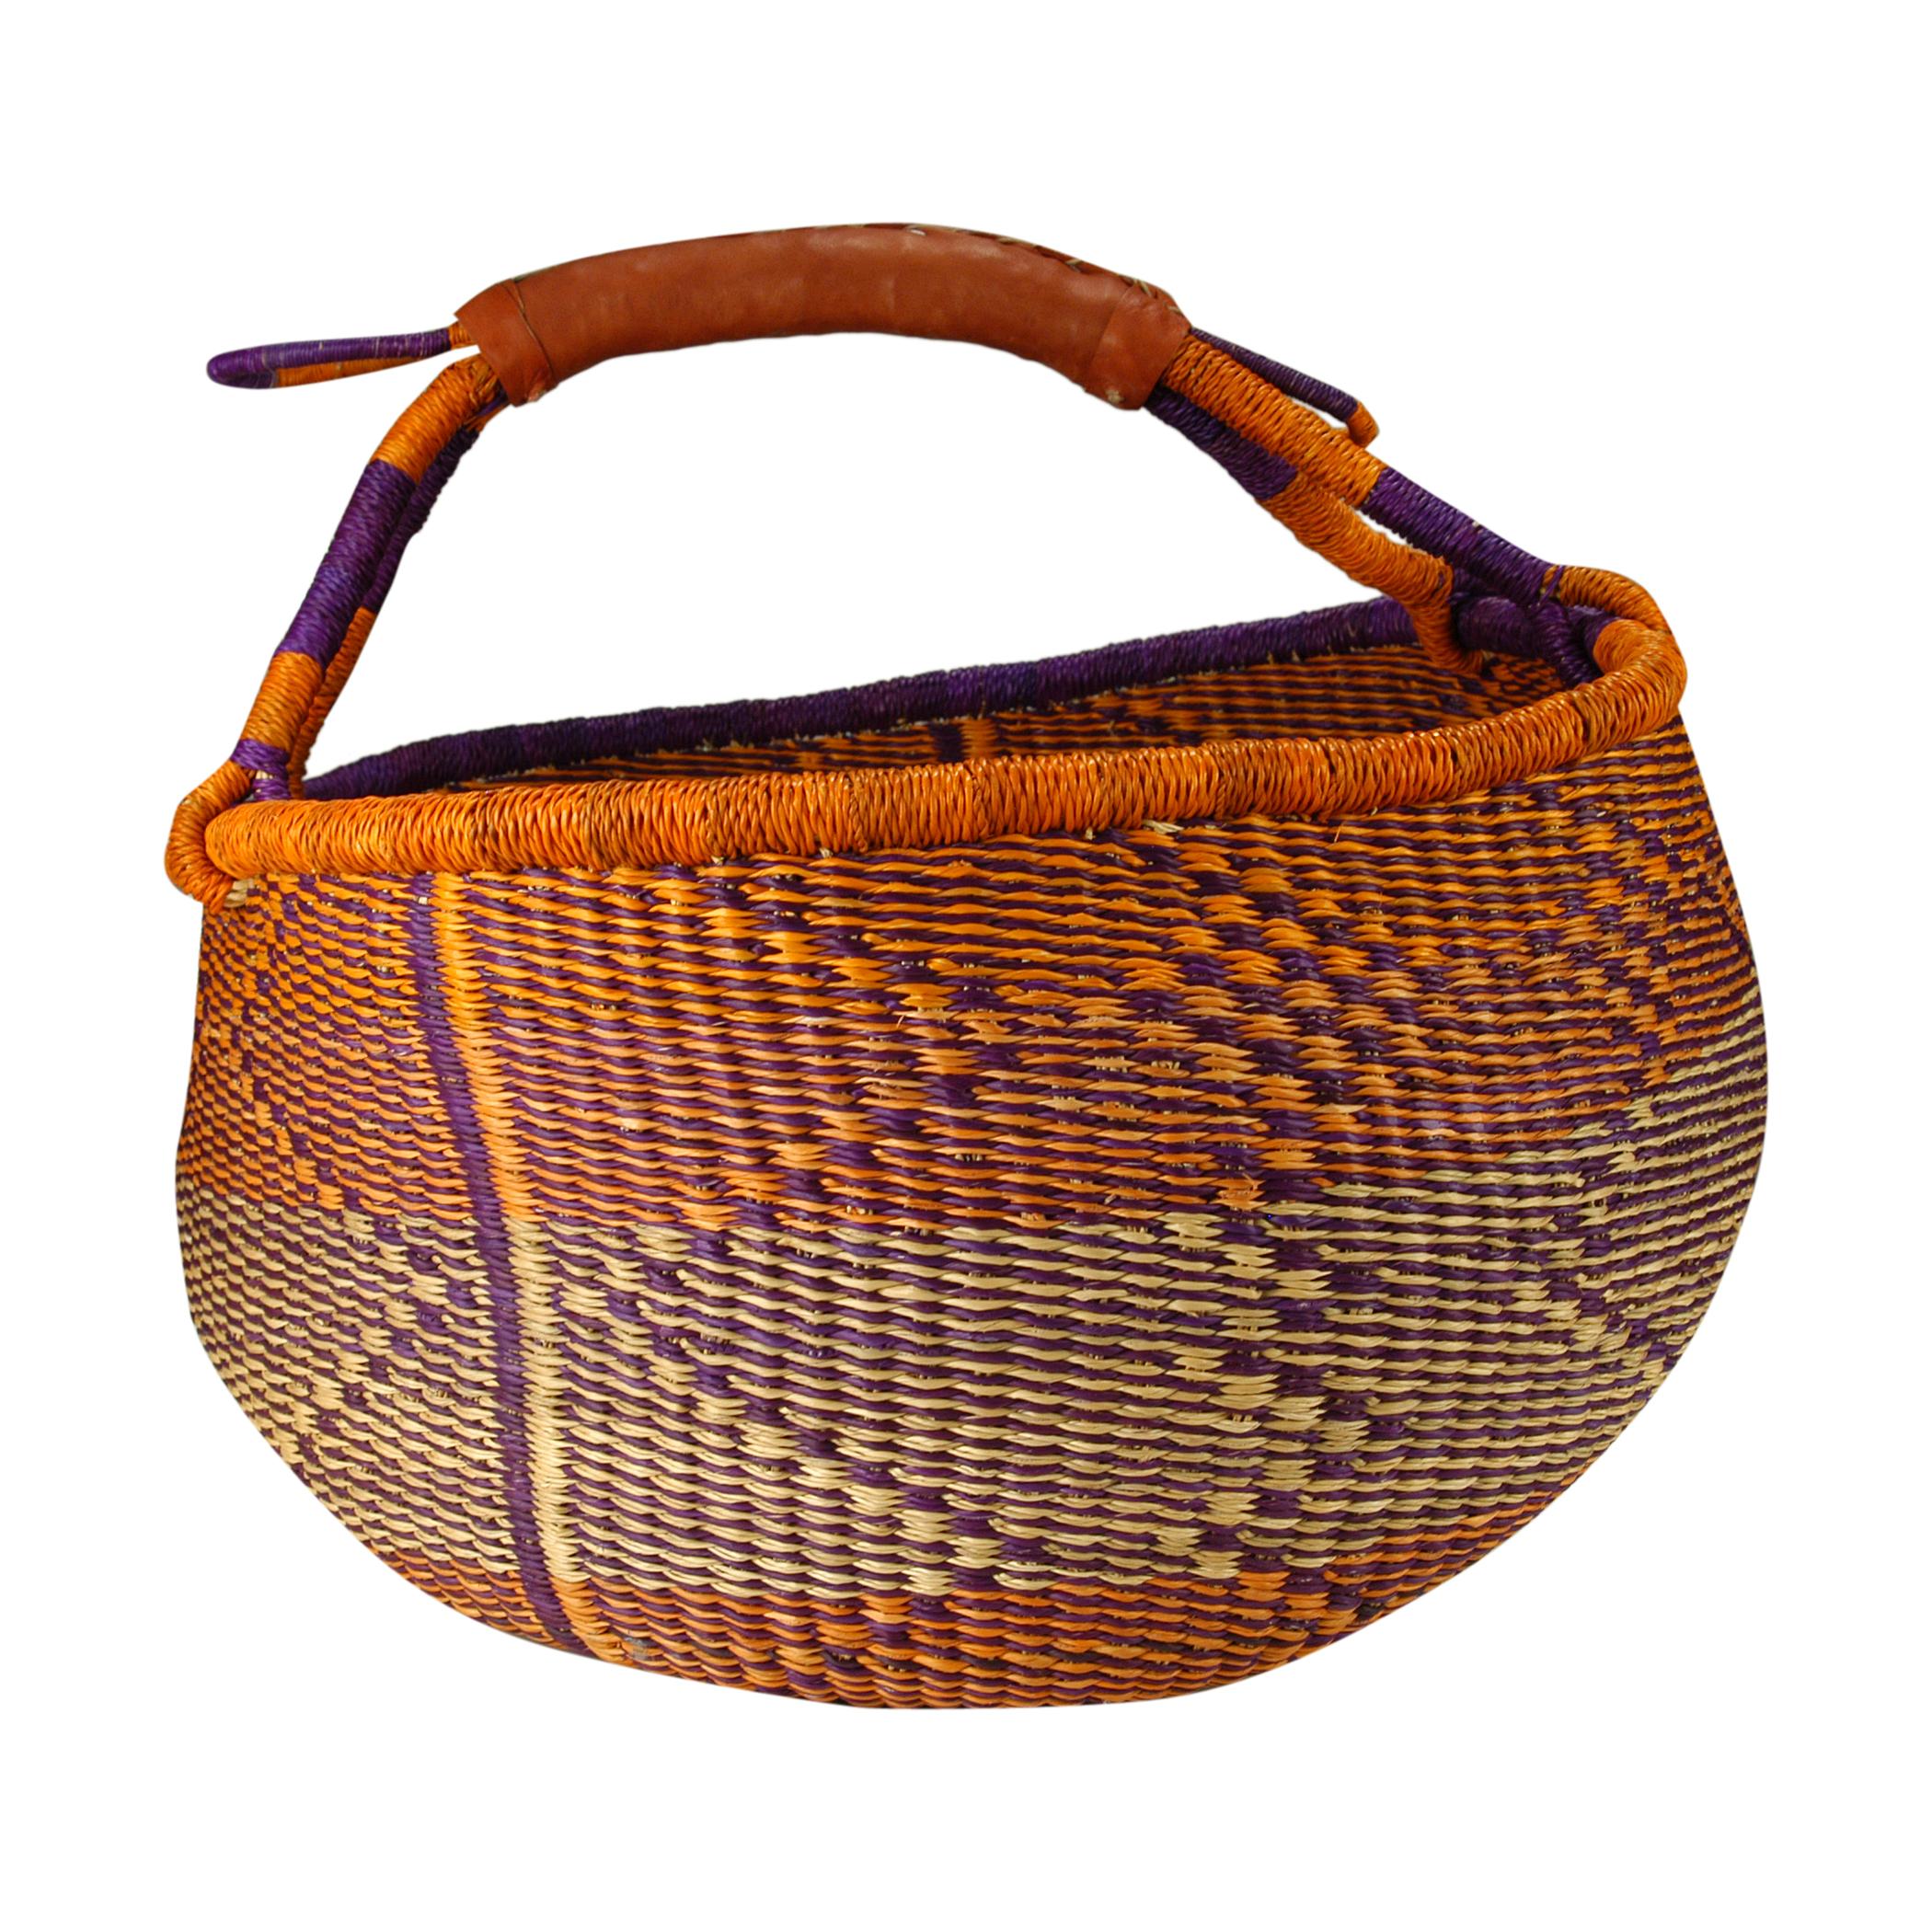  Bolga Market Basket - Large